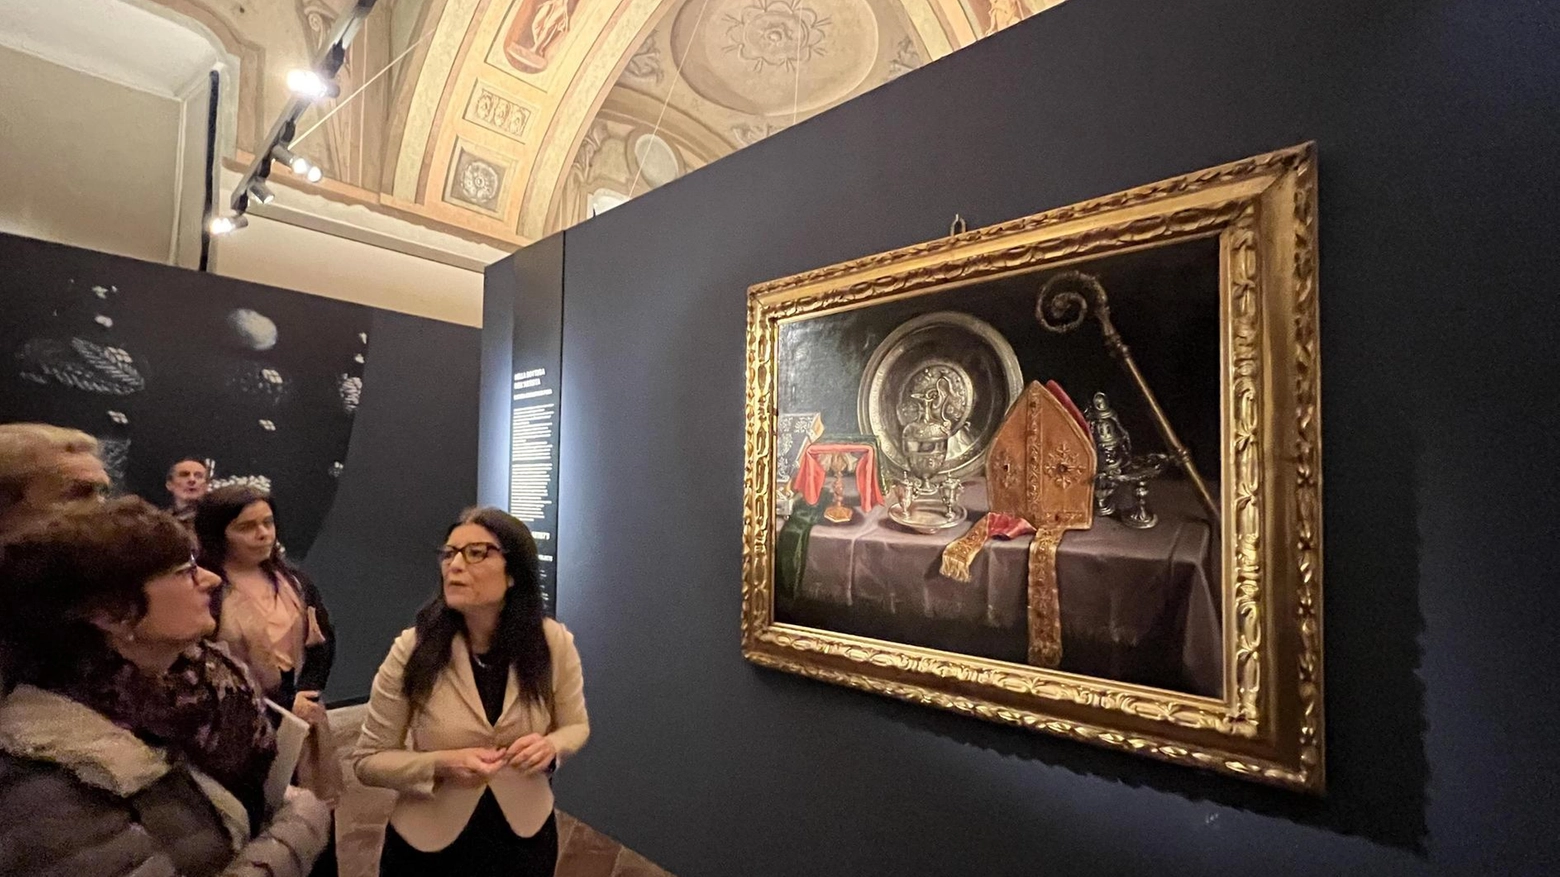 Guercino superstar in mostra a Torino: "Qui per onorarlo"